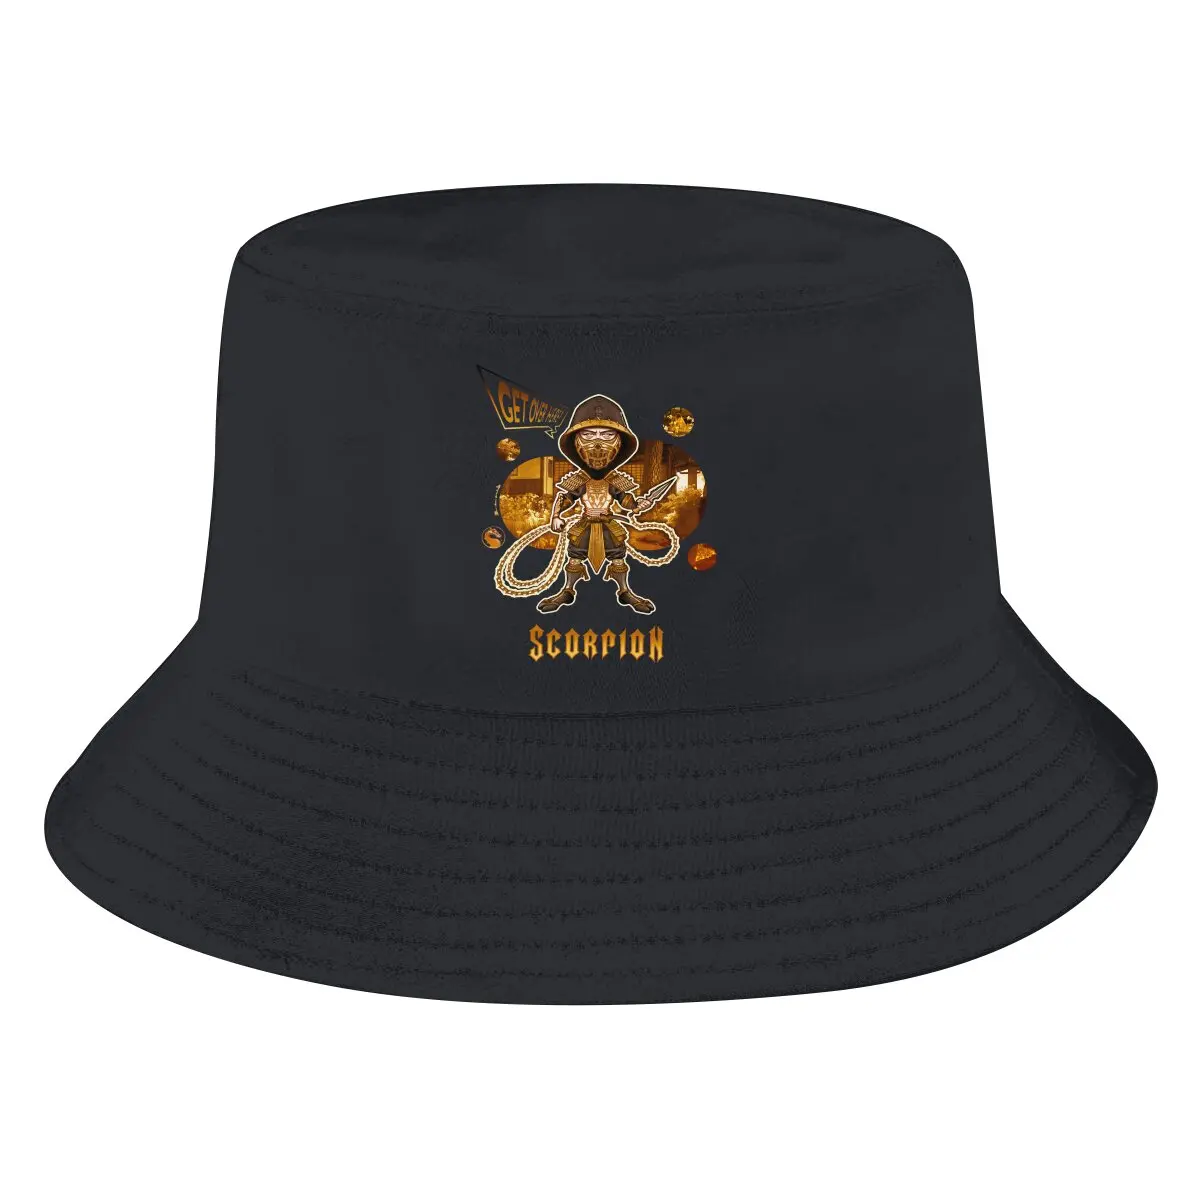 

Scorpion Gold Bucket Hat Mortal Kombat Summer UnisexOutdoor Sunscreen Hat Fishing Hunting Cap Basin Beach